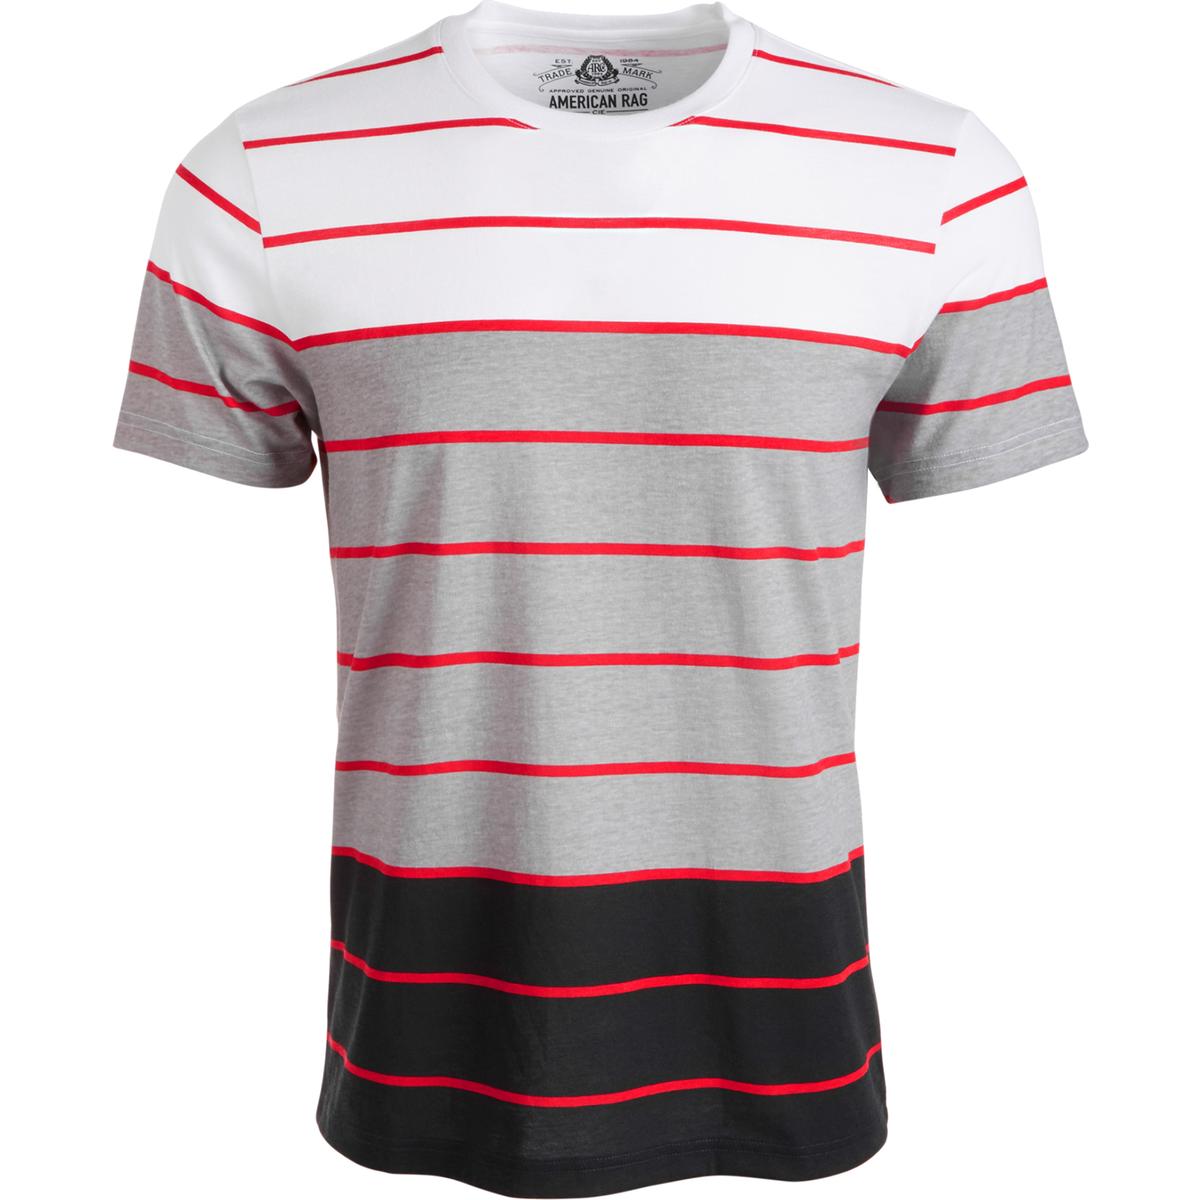 American Rag Mens Striped Tee T-Shirt